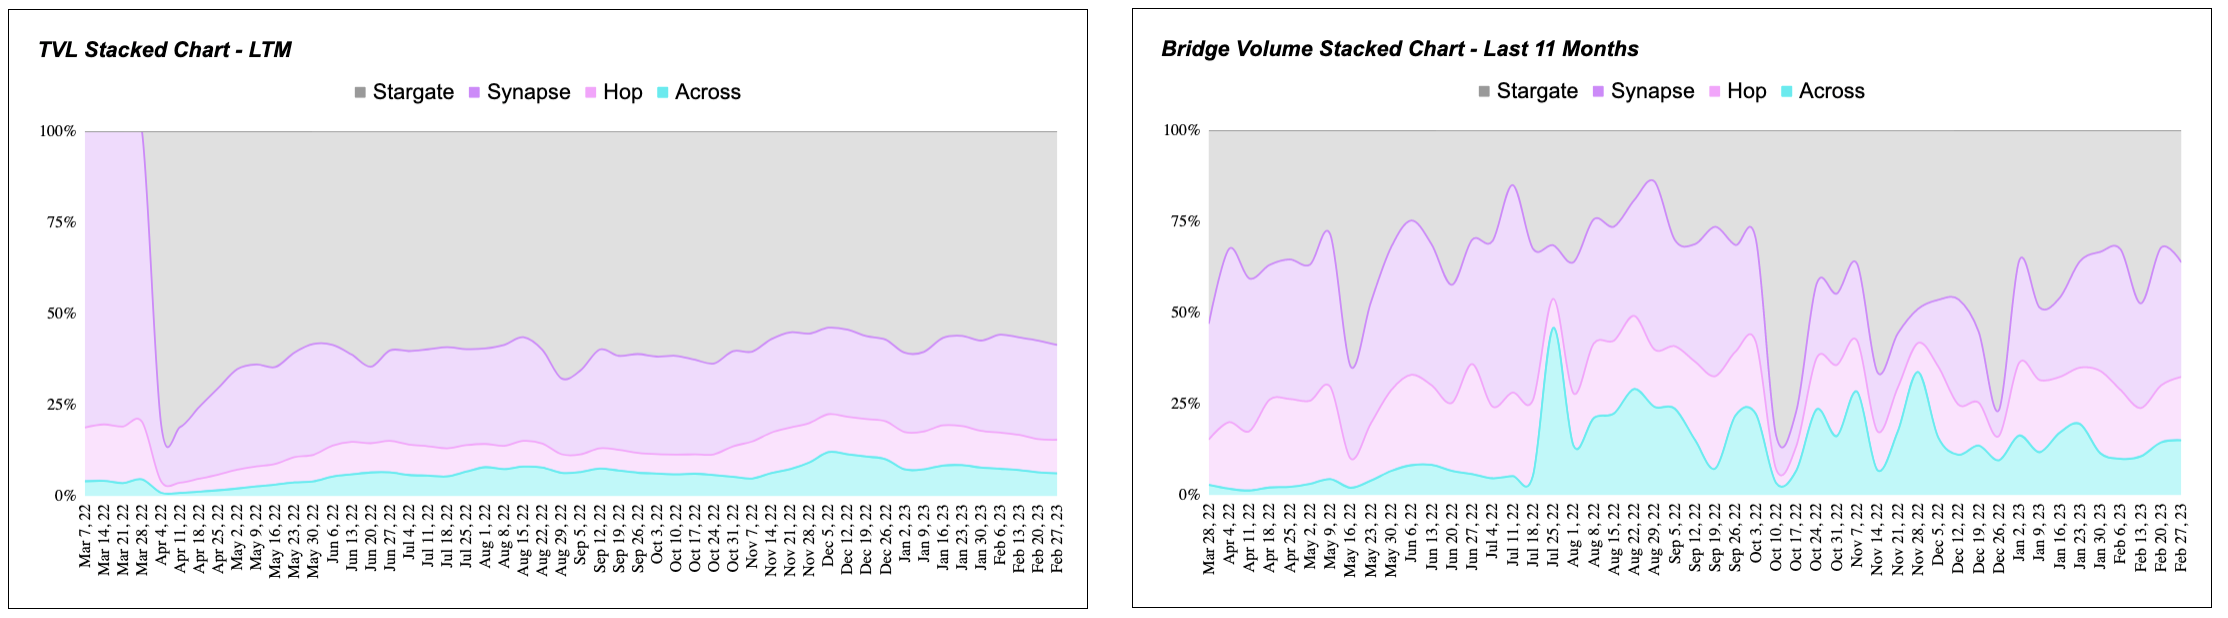 TVL and Bridge Volume Stacked Charts (Last Twelve and 11 Months)